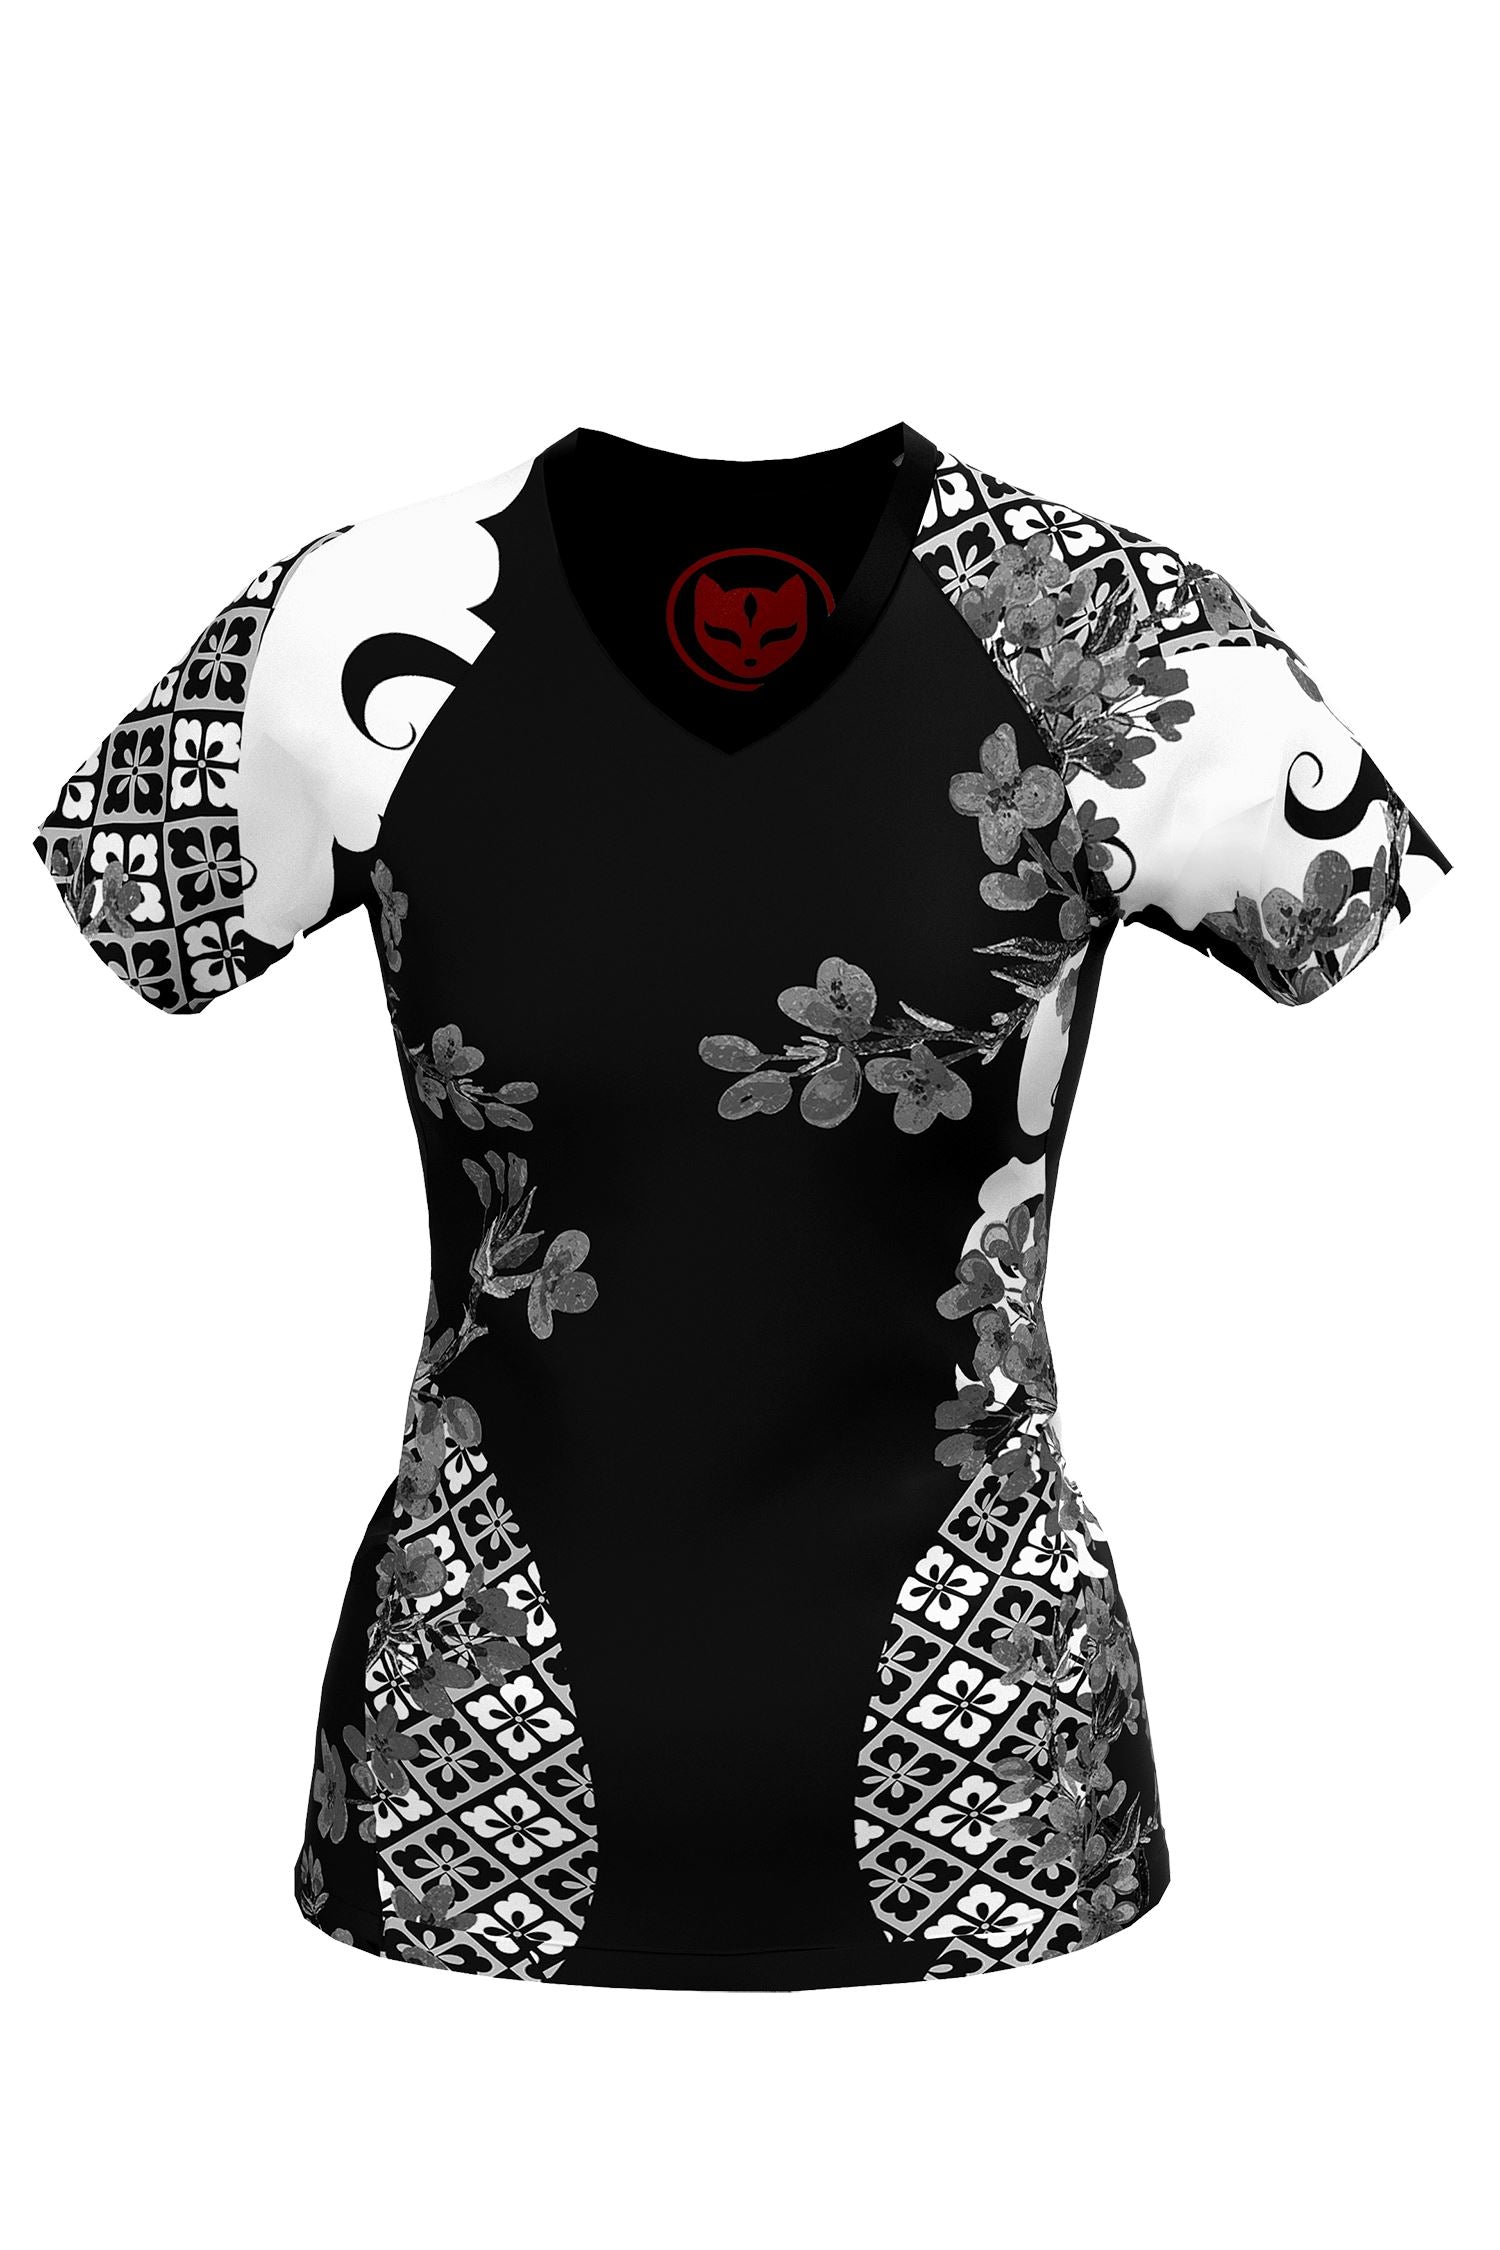 Women's Cherry Blossom Ranked Jiu Jitsu Art Wear Rashguard - Short Sleeve